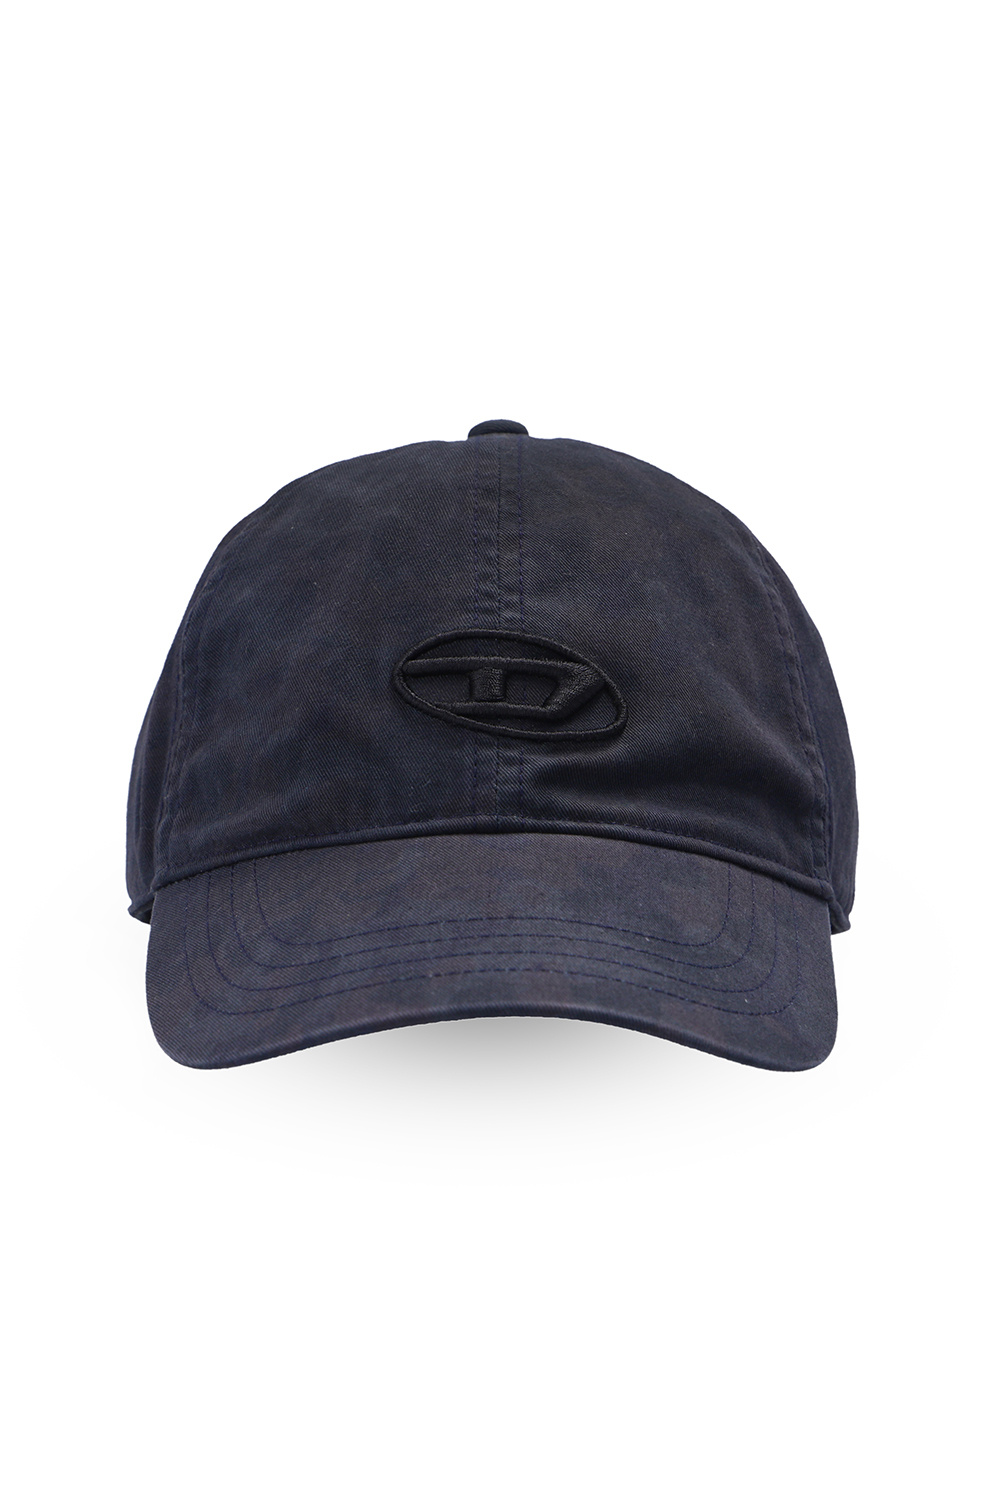 Diesel ‘Stian’ baseball cap with logo